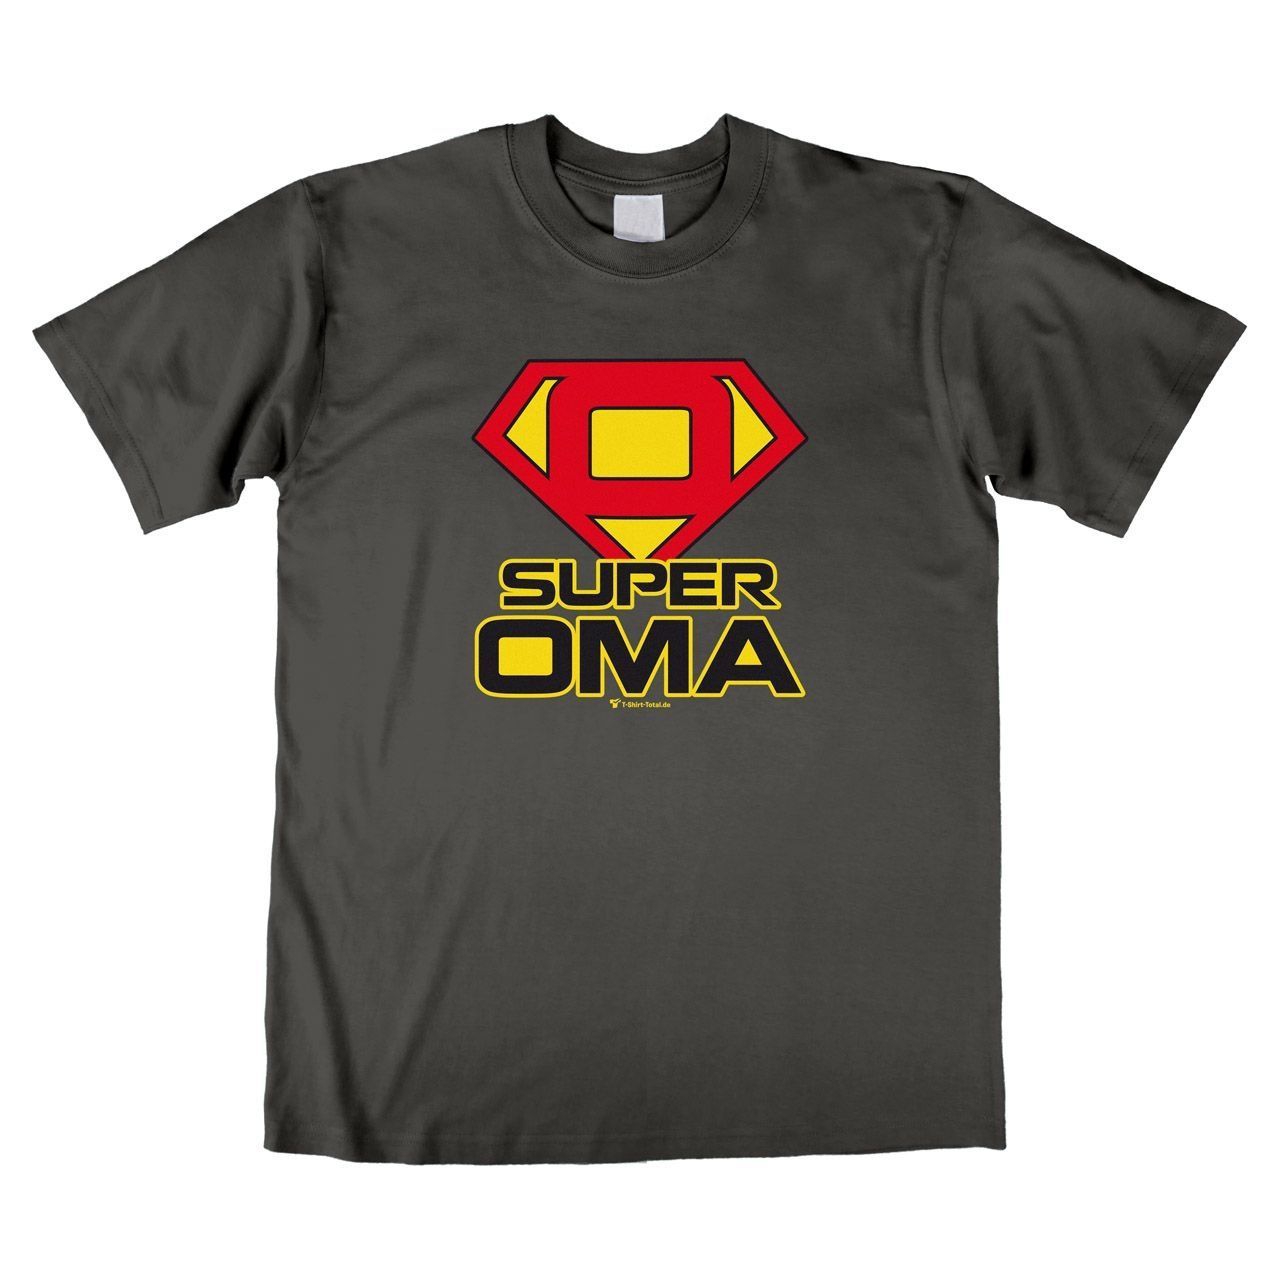 Super Oma Unisex T-Shirt grau Medium